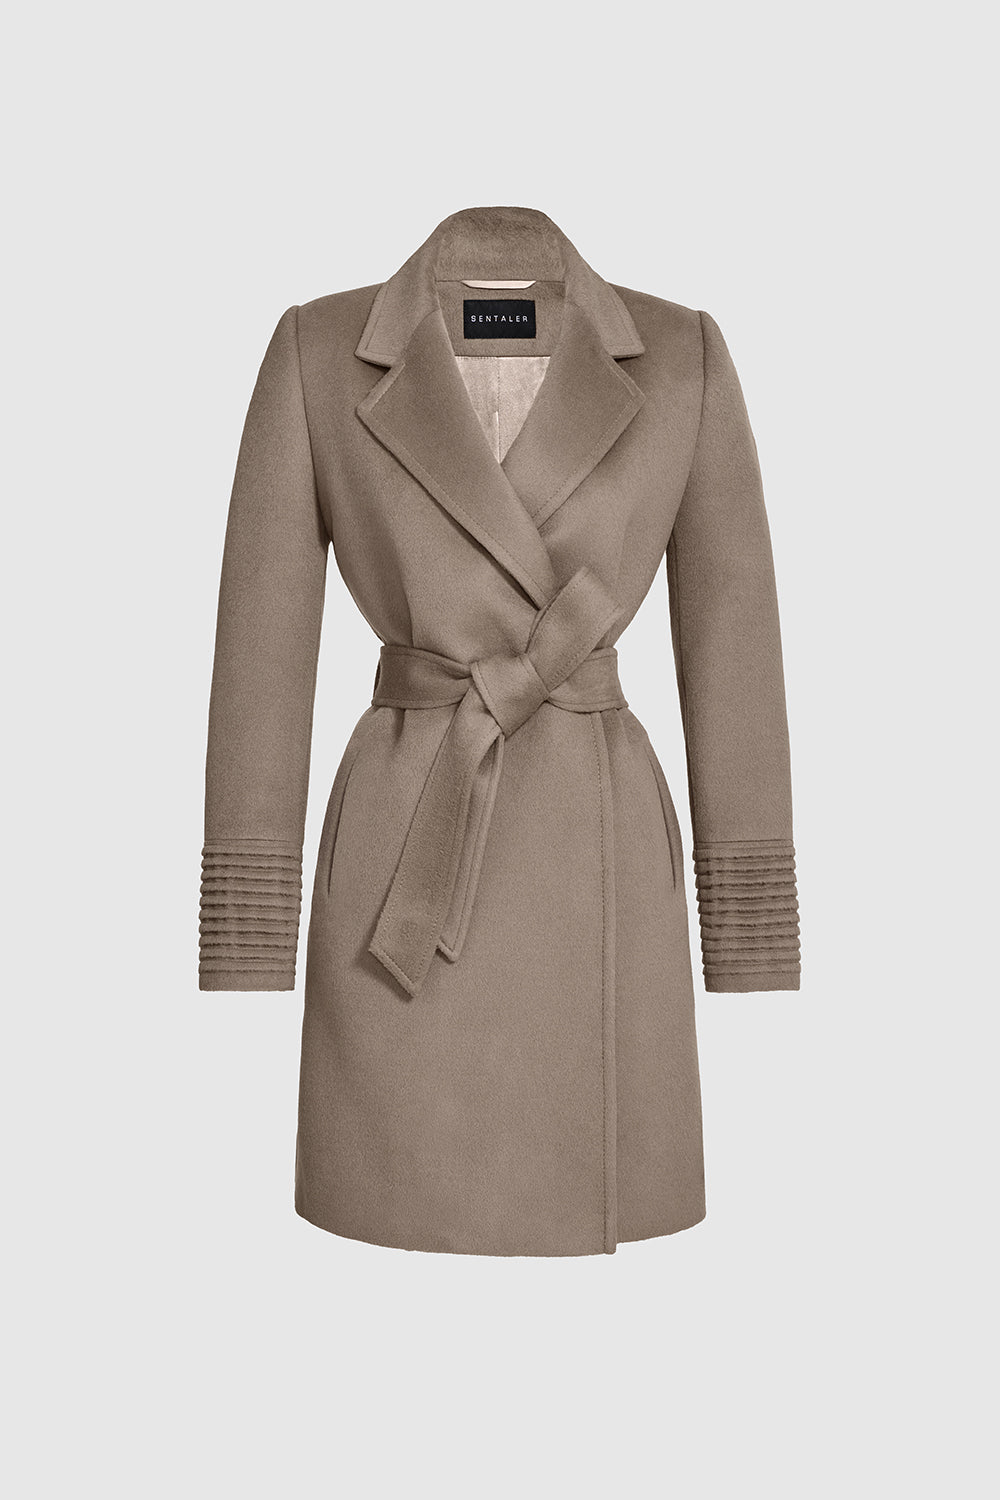 Louis Vuitton Signature Hooded Wrap Robe Coat Beige. Size 36